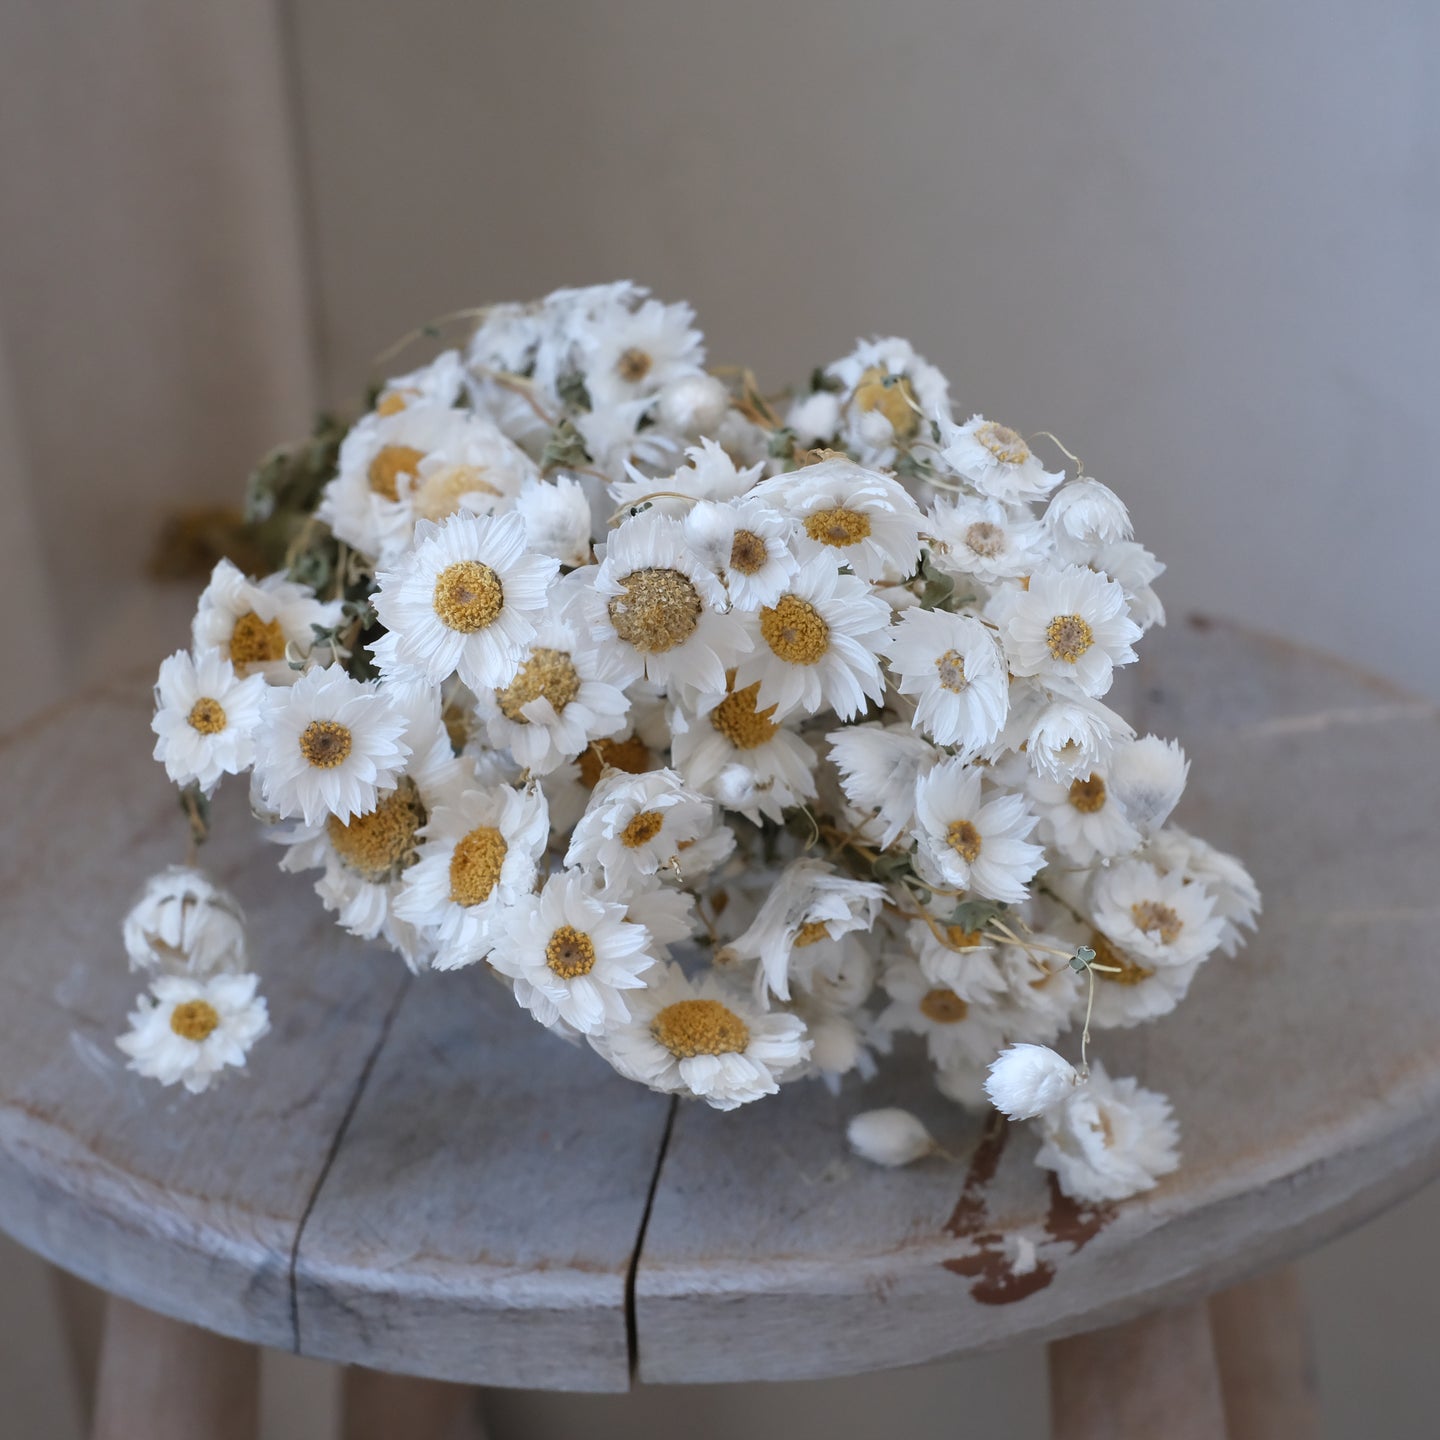 Dried Rodanthe | Dried daisies